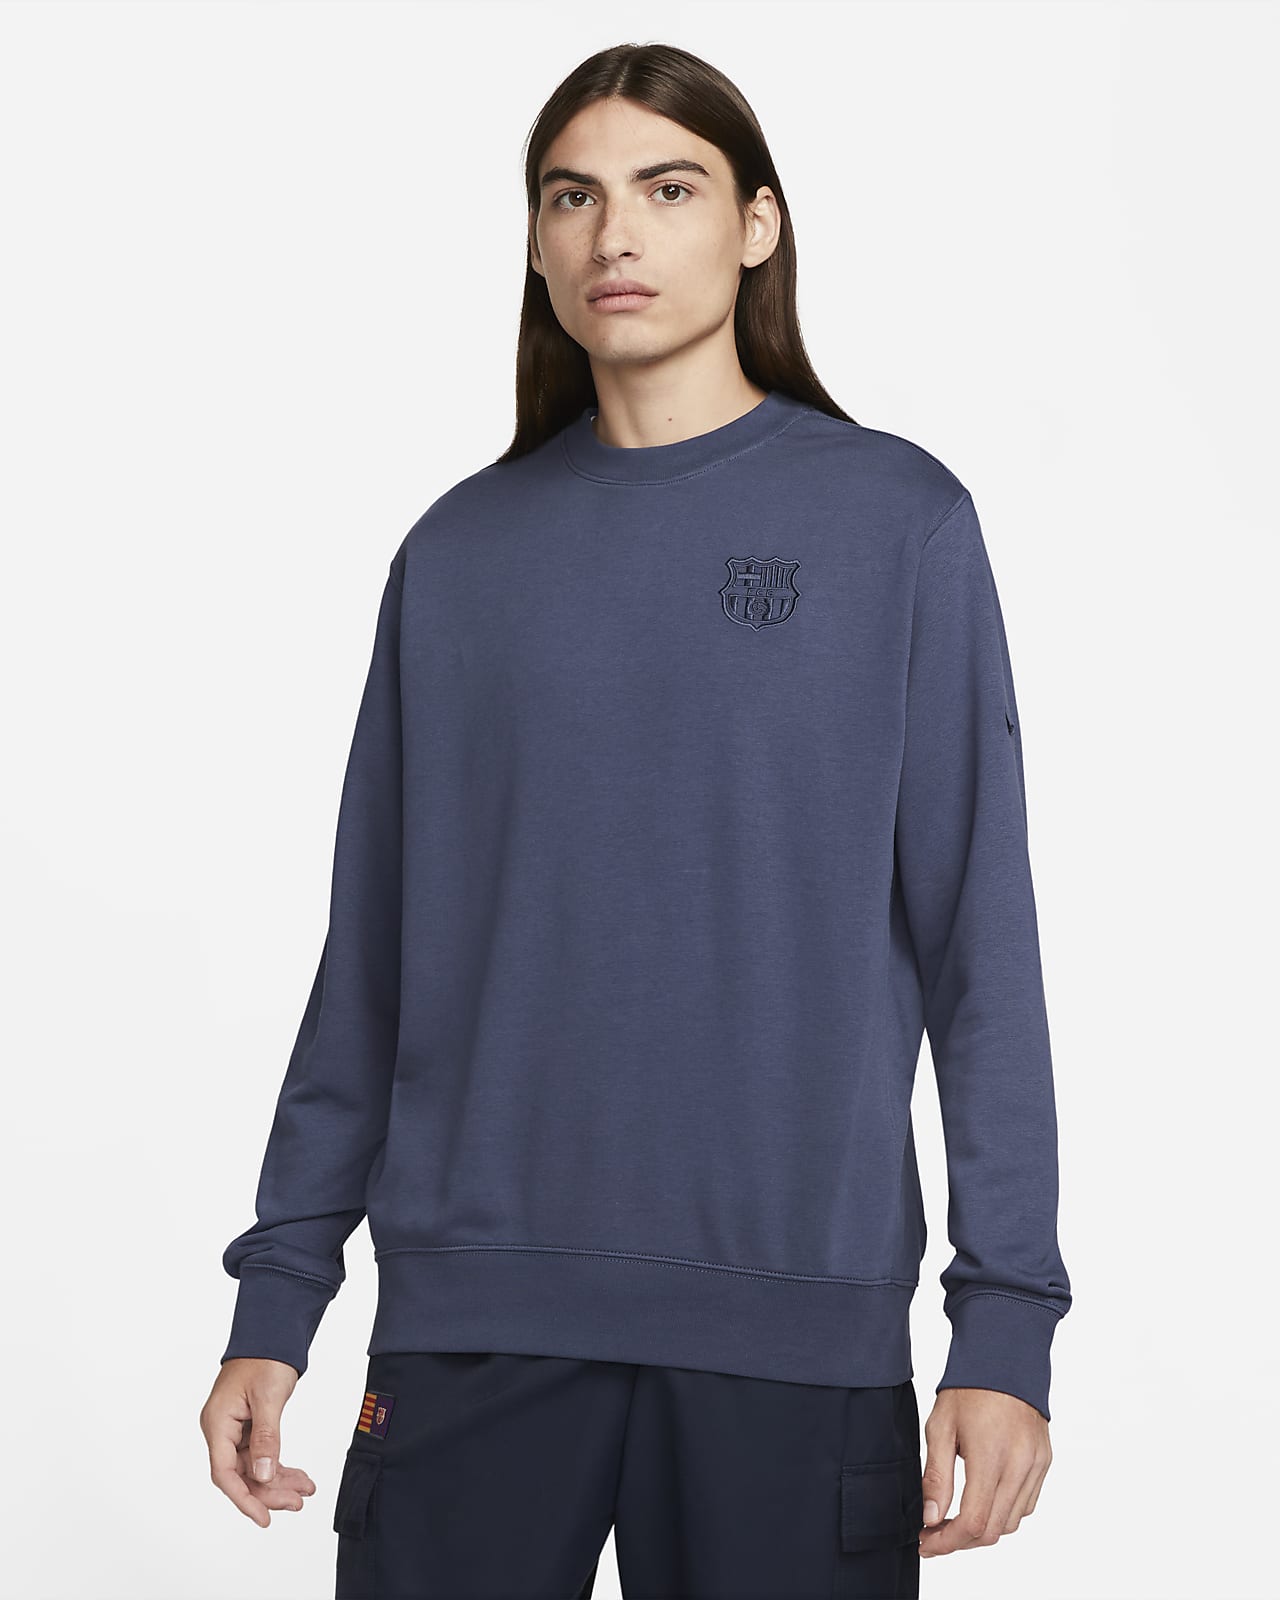 FC Barcelona Club Üçüncü Nike Fransız Havlu Kumaşı Crew Yakalı Erkek Futbol Sweatshirt'ü